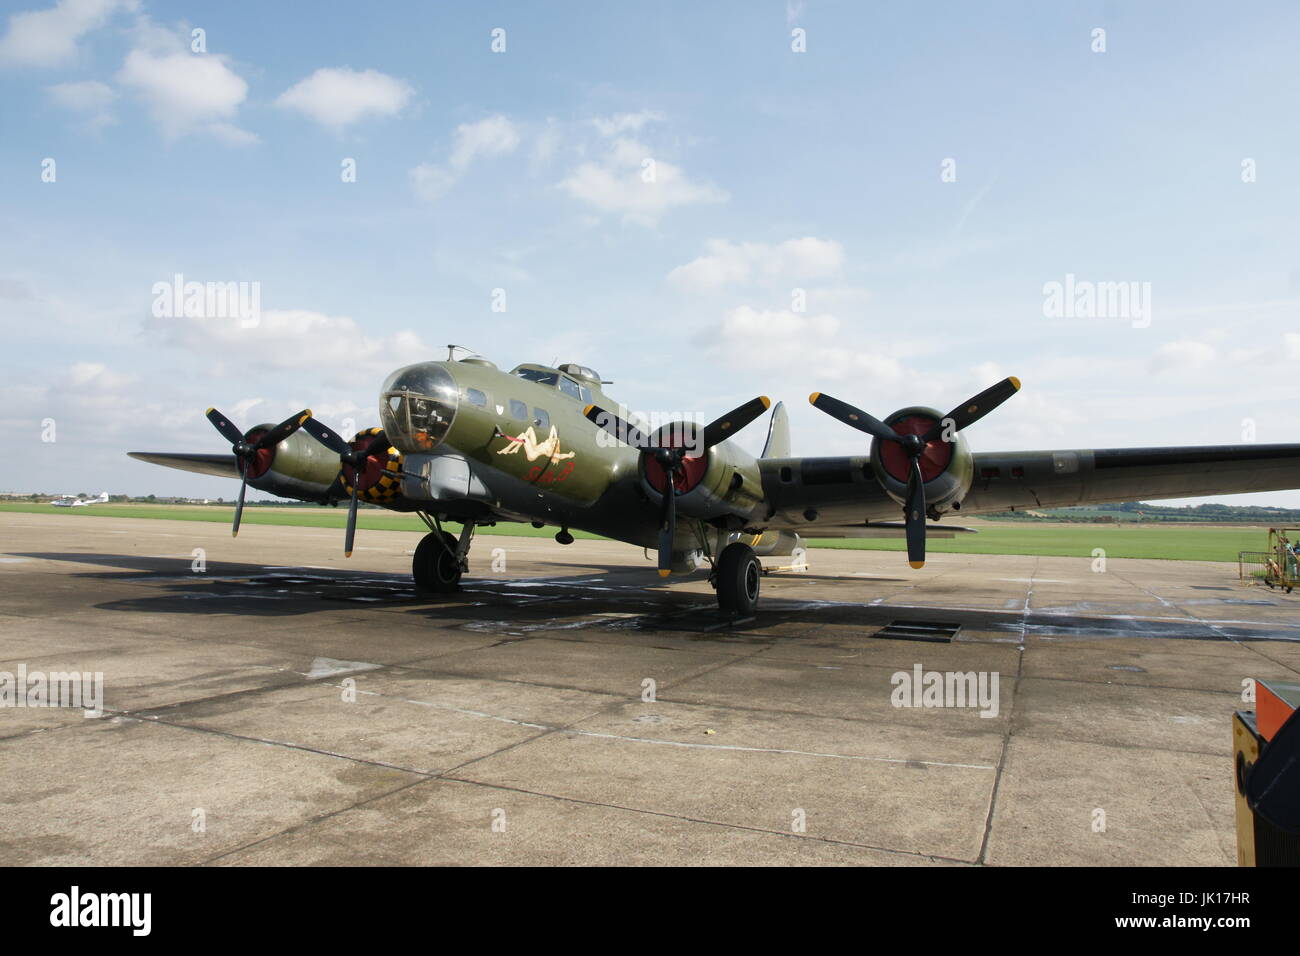 B-17 flying fortress americium WW2 heavy bomber Stock Photo